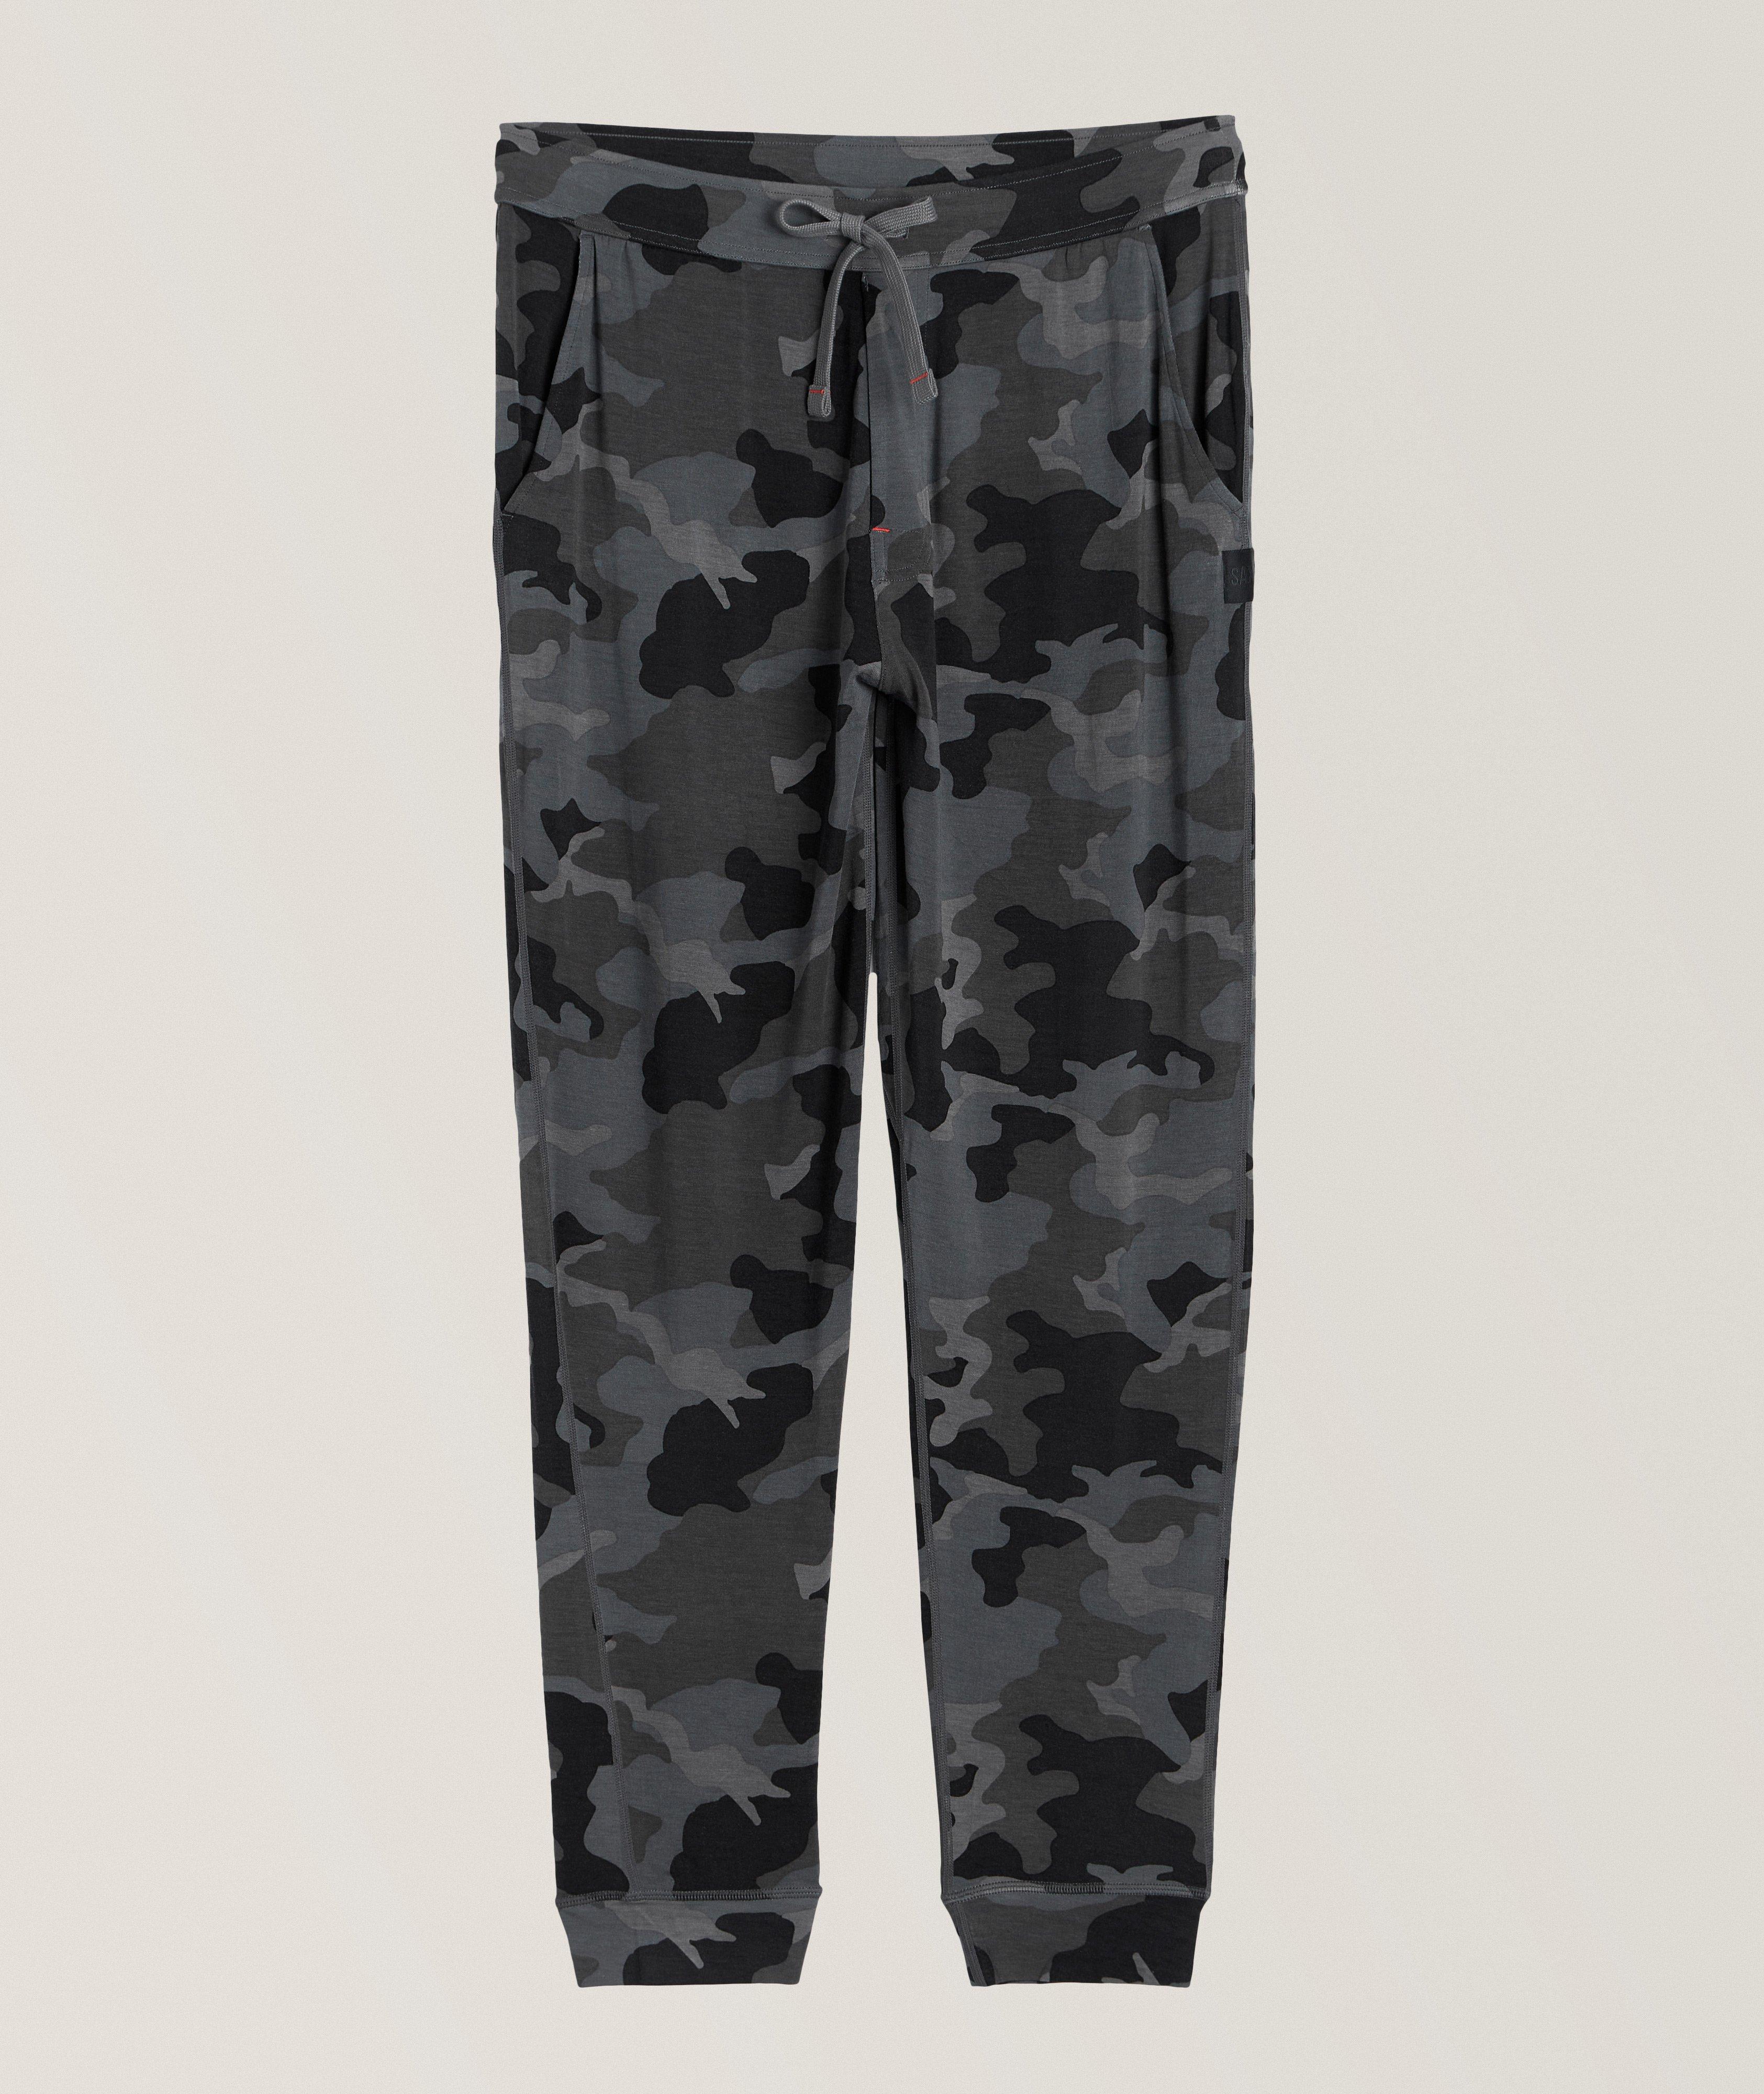 Snooze Camouflage Lounge Pants